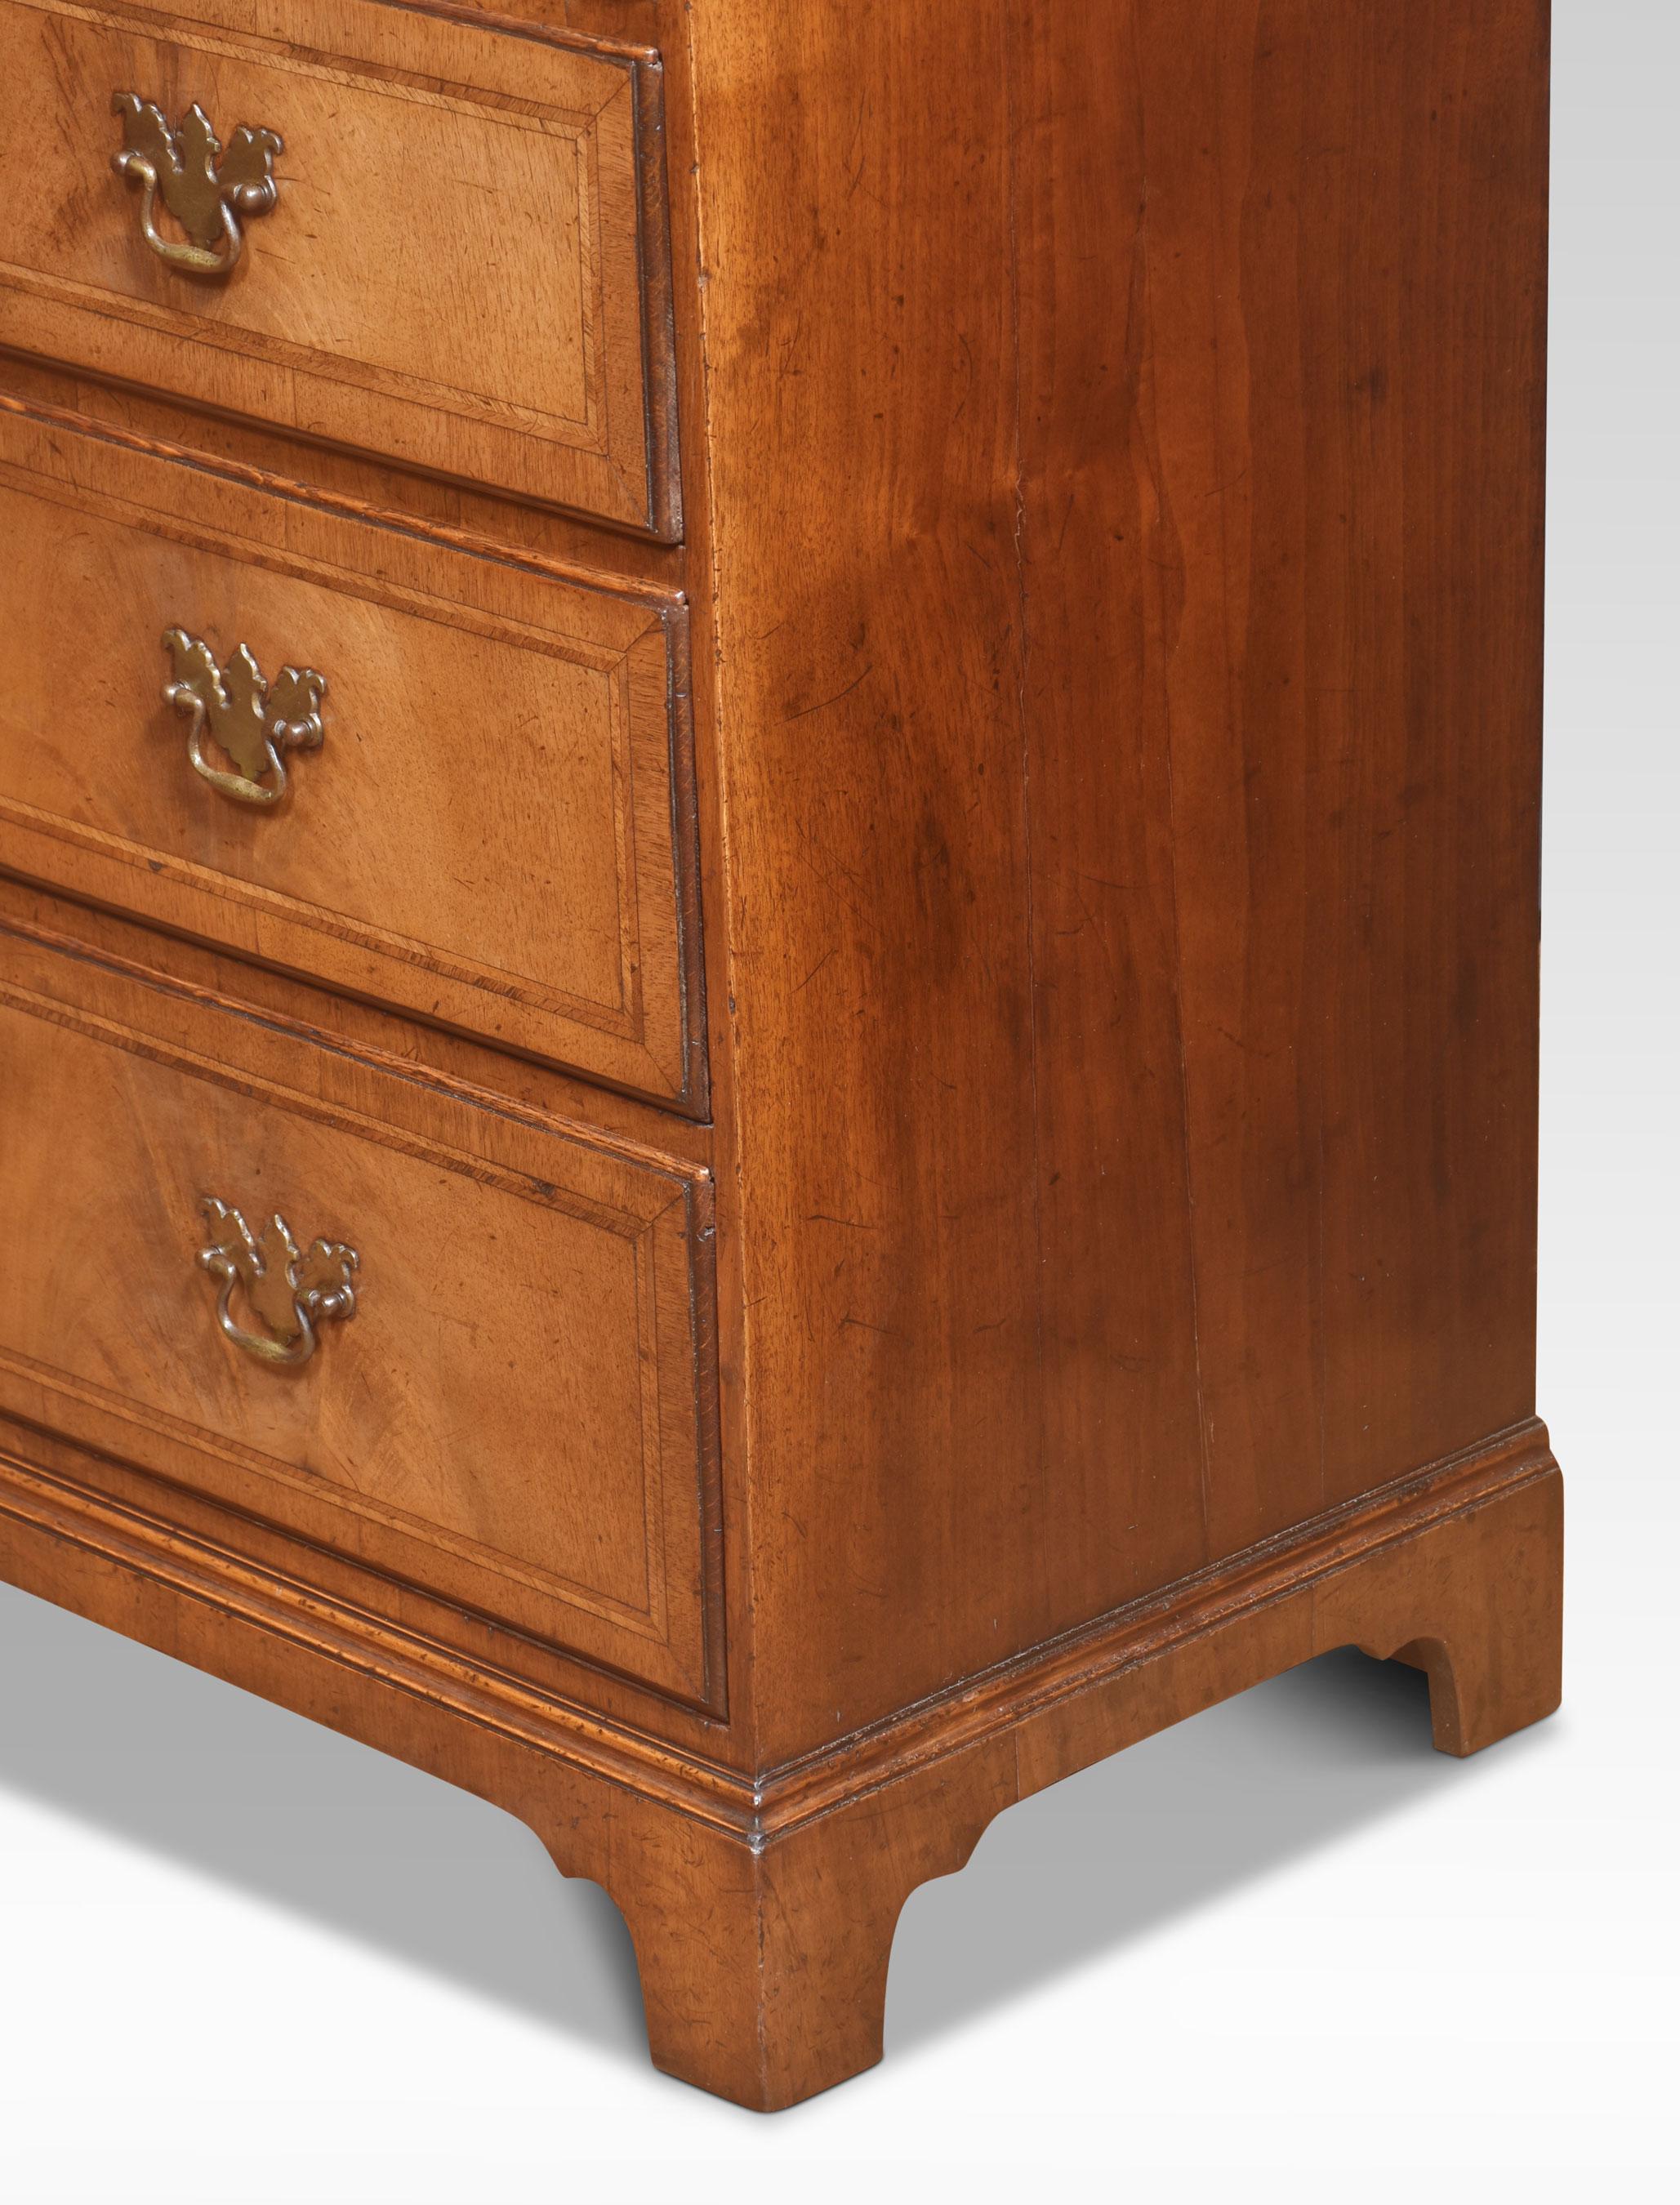 19th Century Georgian revival walnut chest of drawers